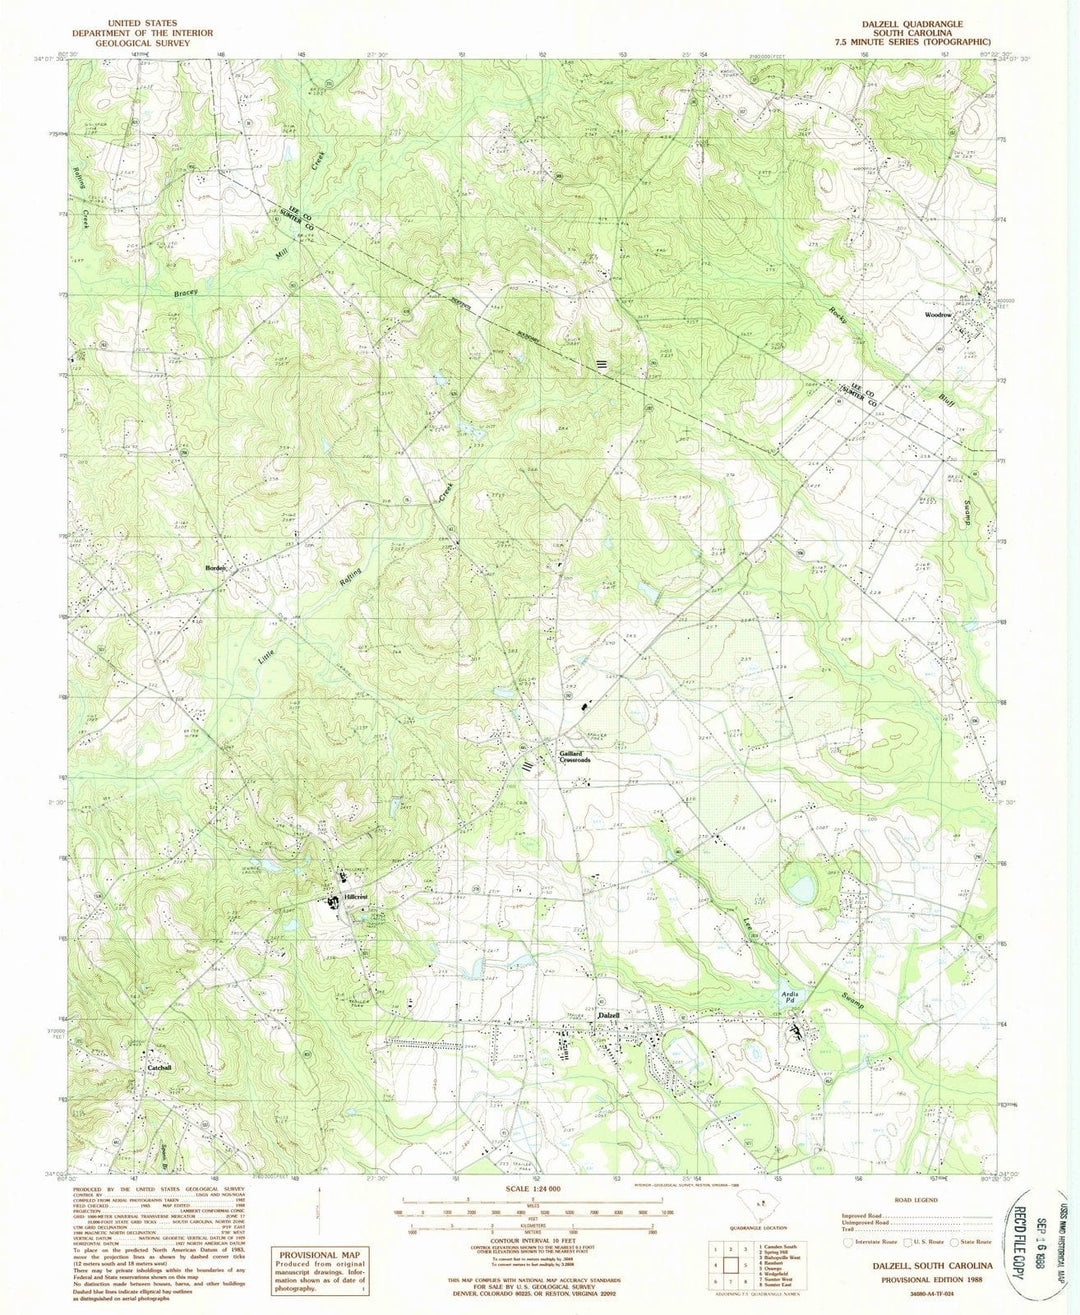 1988 Dalzell, SC - South Carolina - USGS Topographic Map